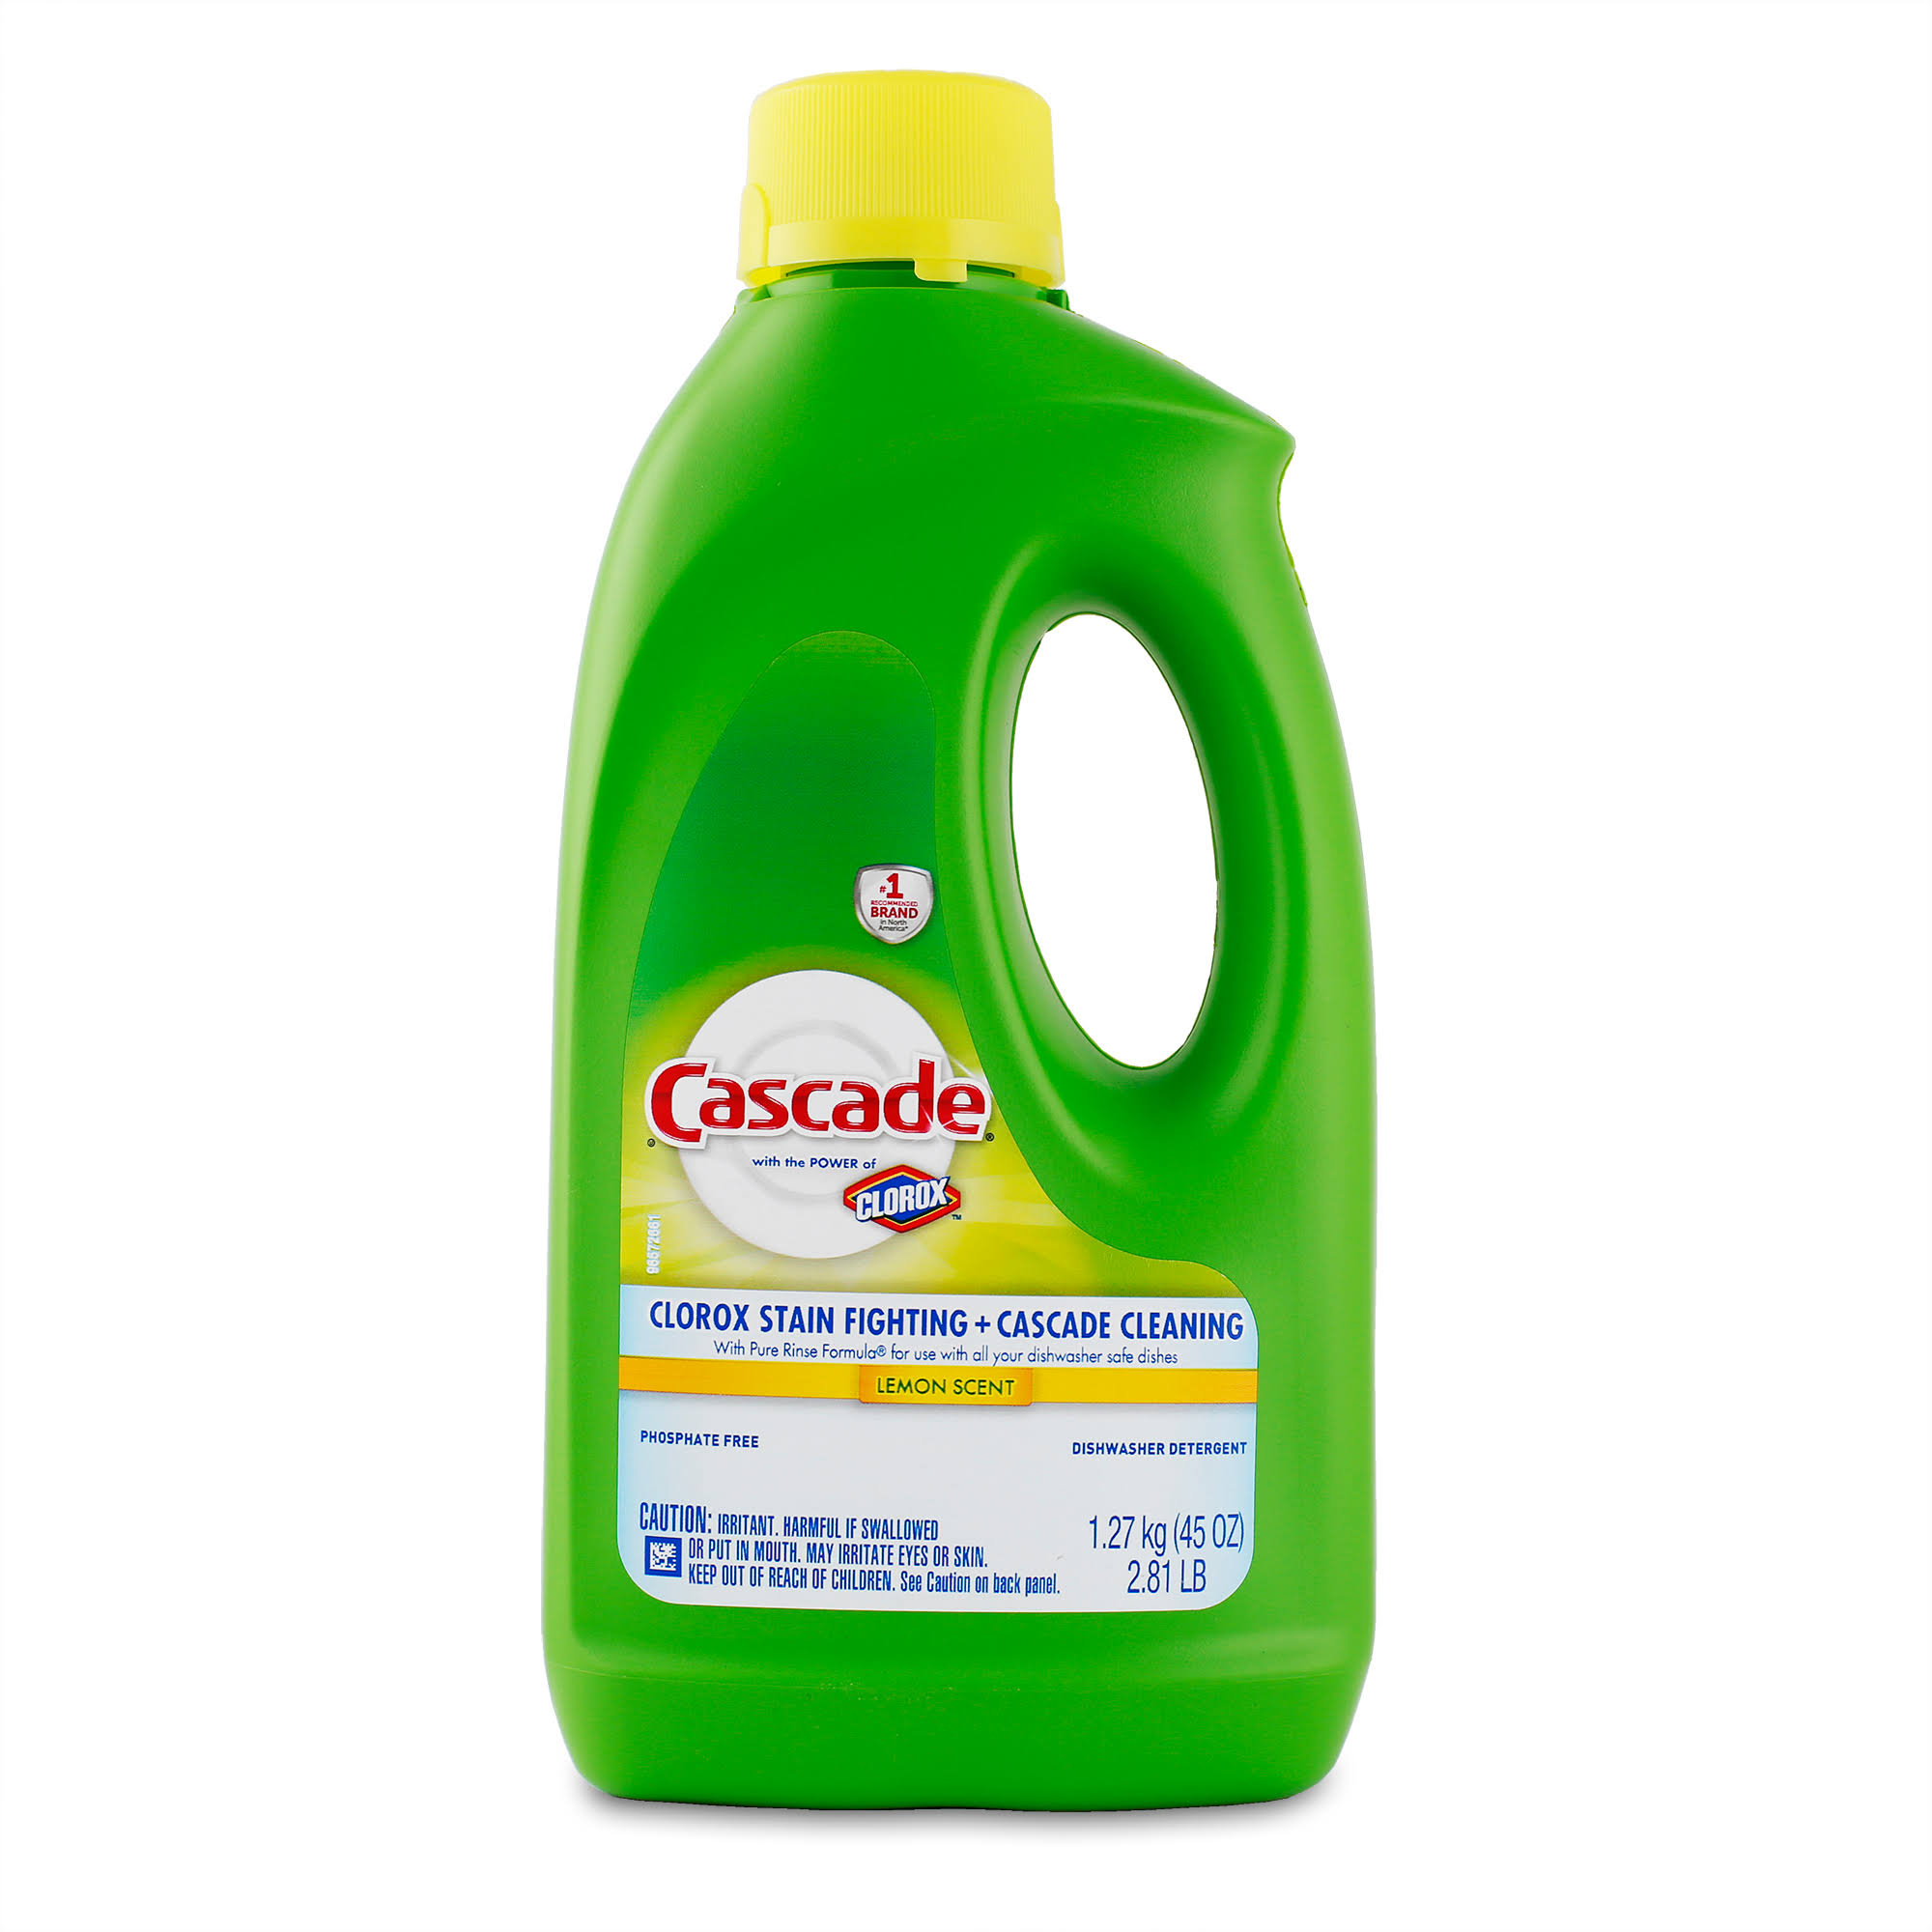 Cascade Pure Rinse Formula Dishwasher Detergent Gel - Lemon, 45oz